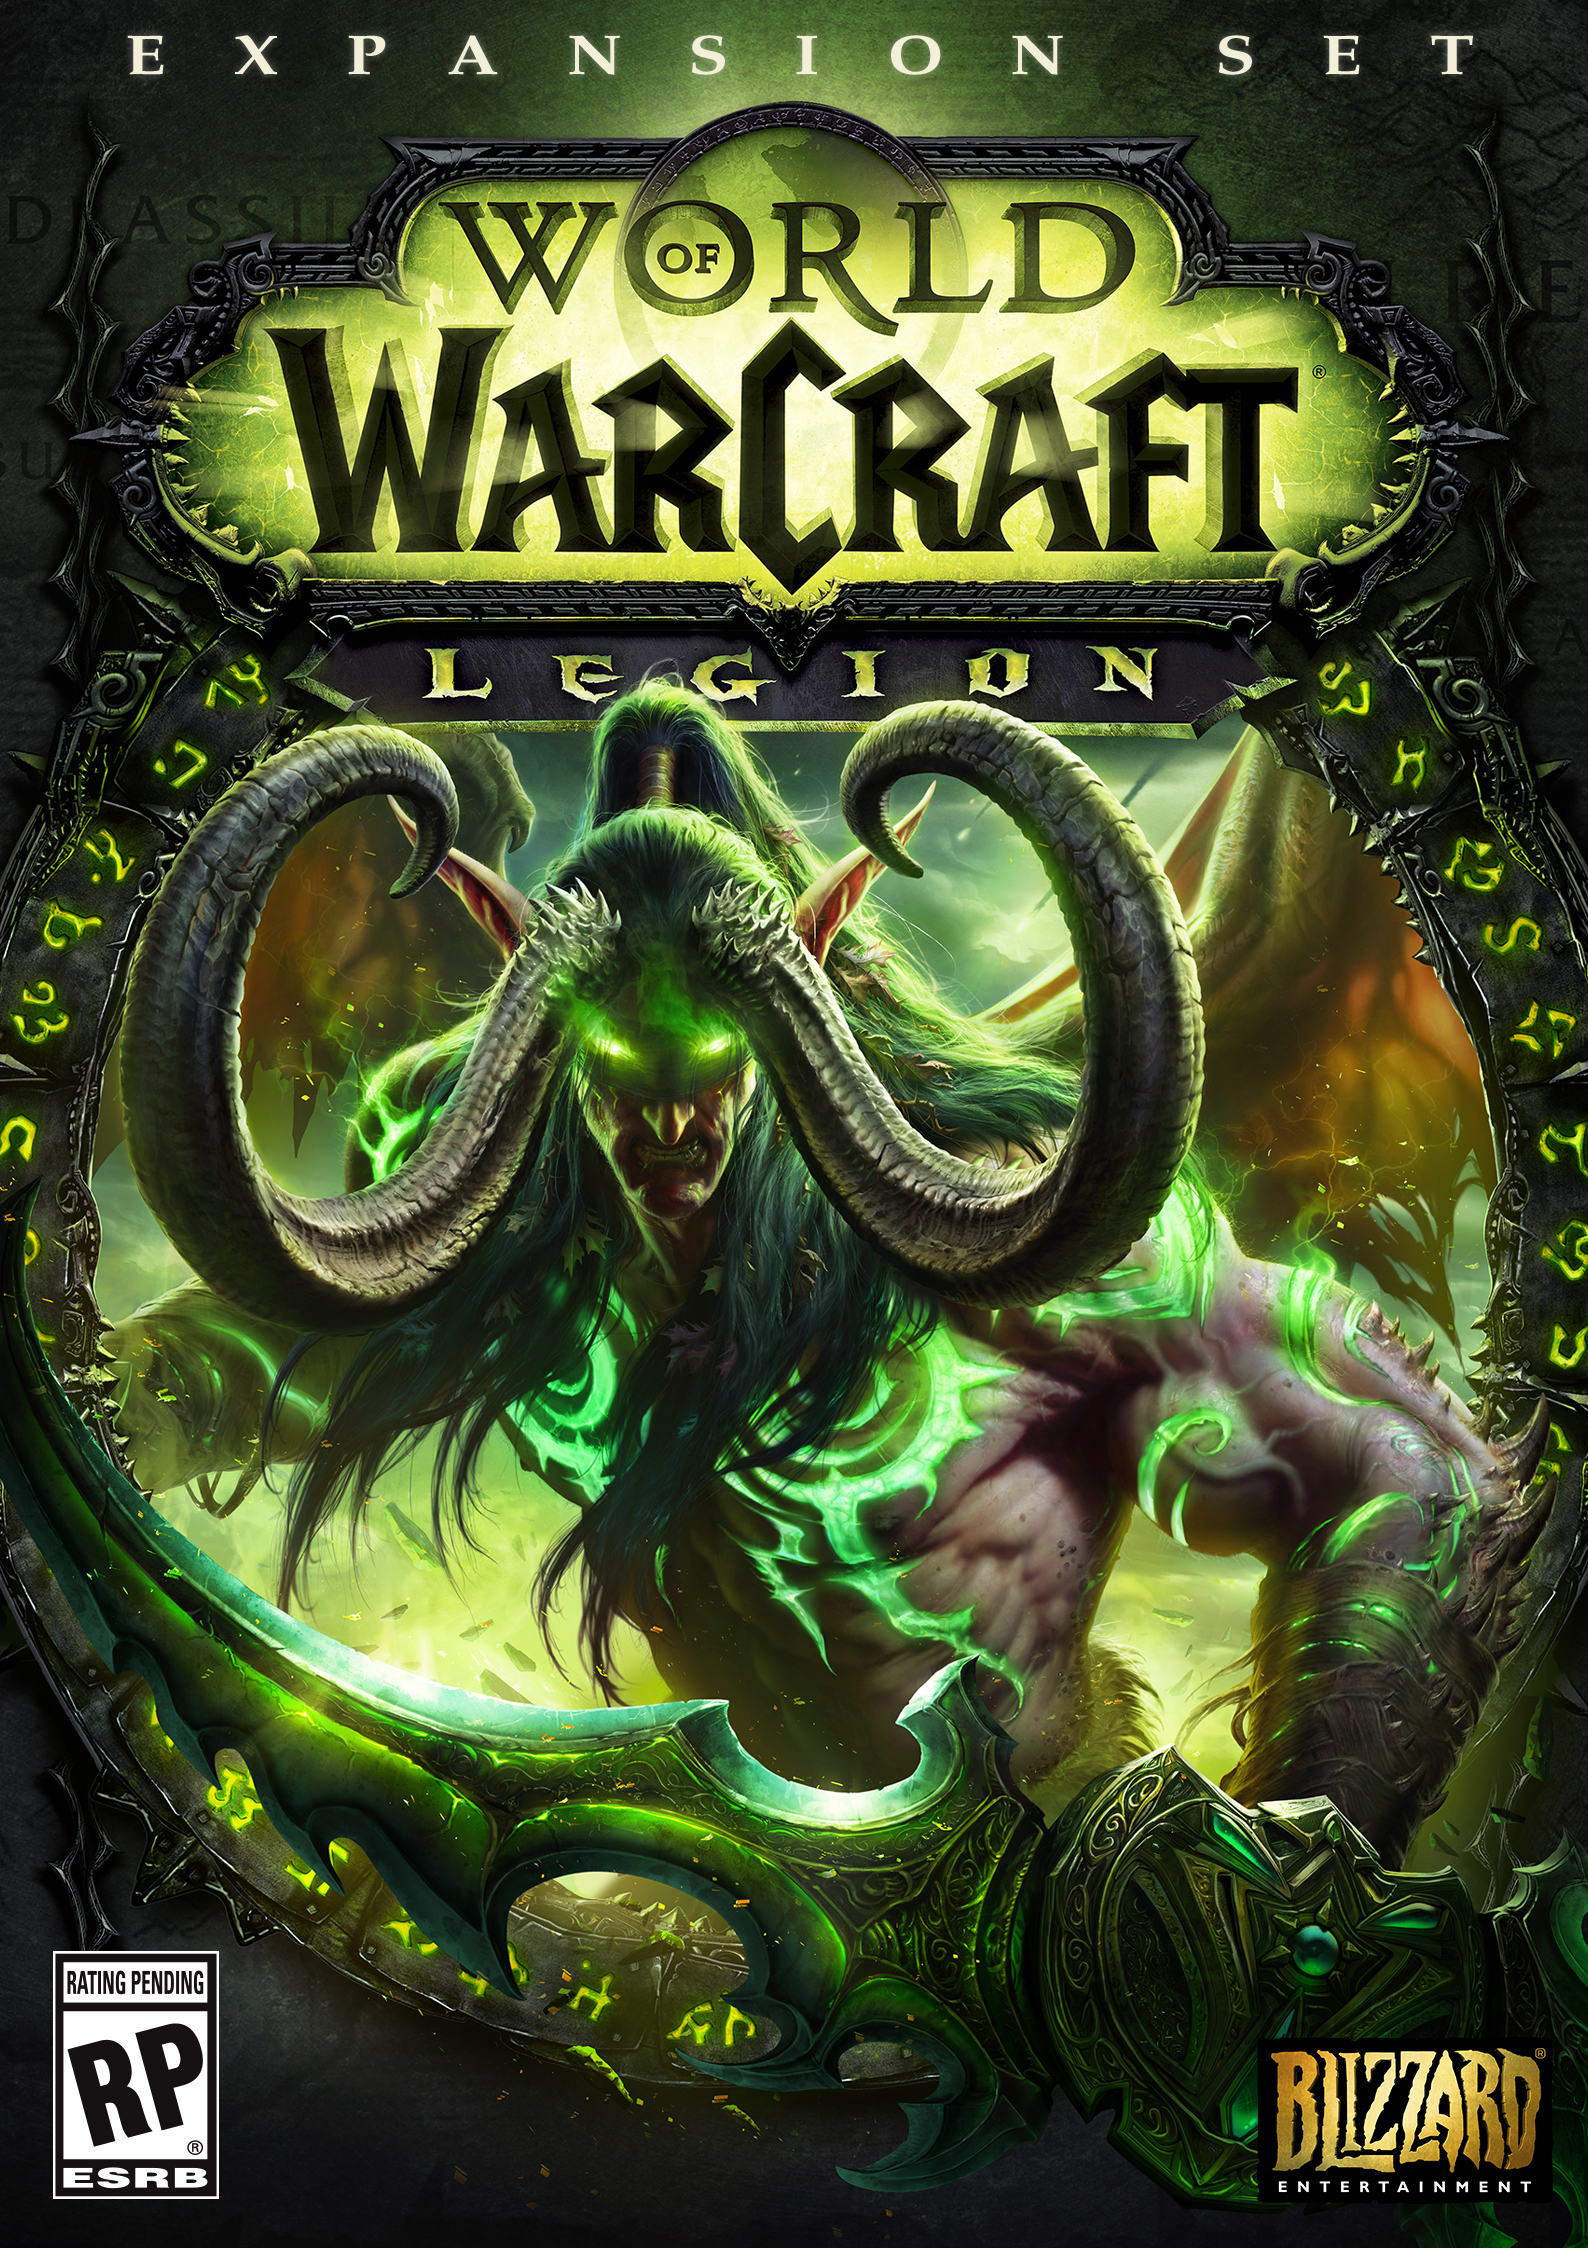 world of warcraft legion app